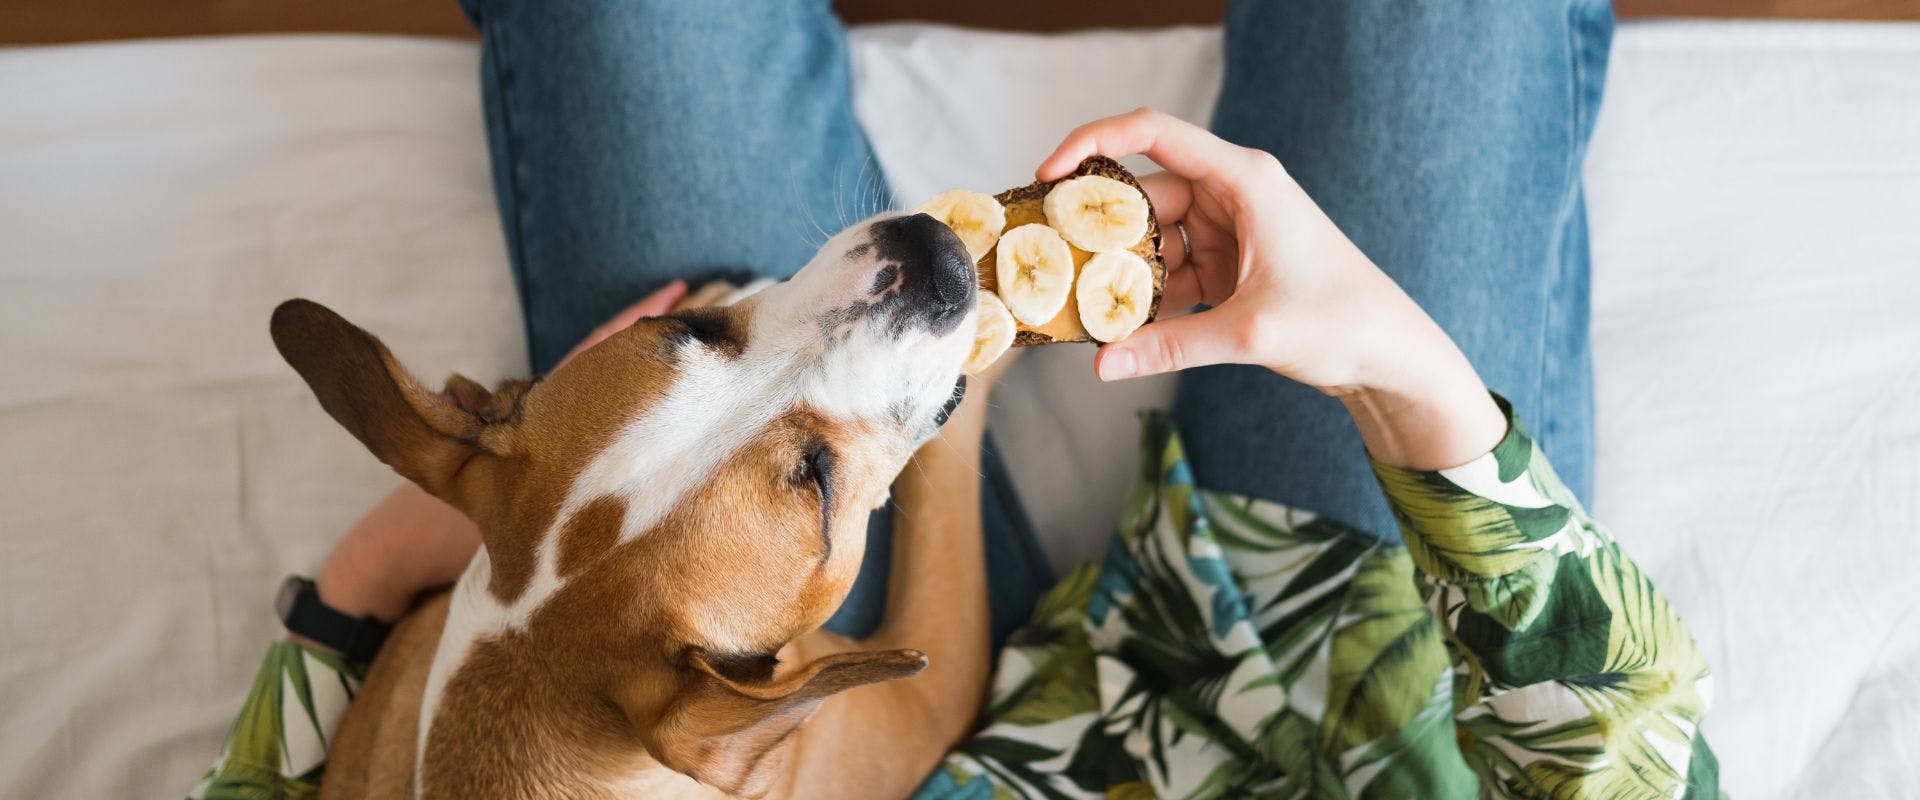 Dog eating peanut butter on toast